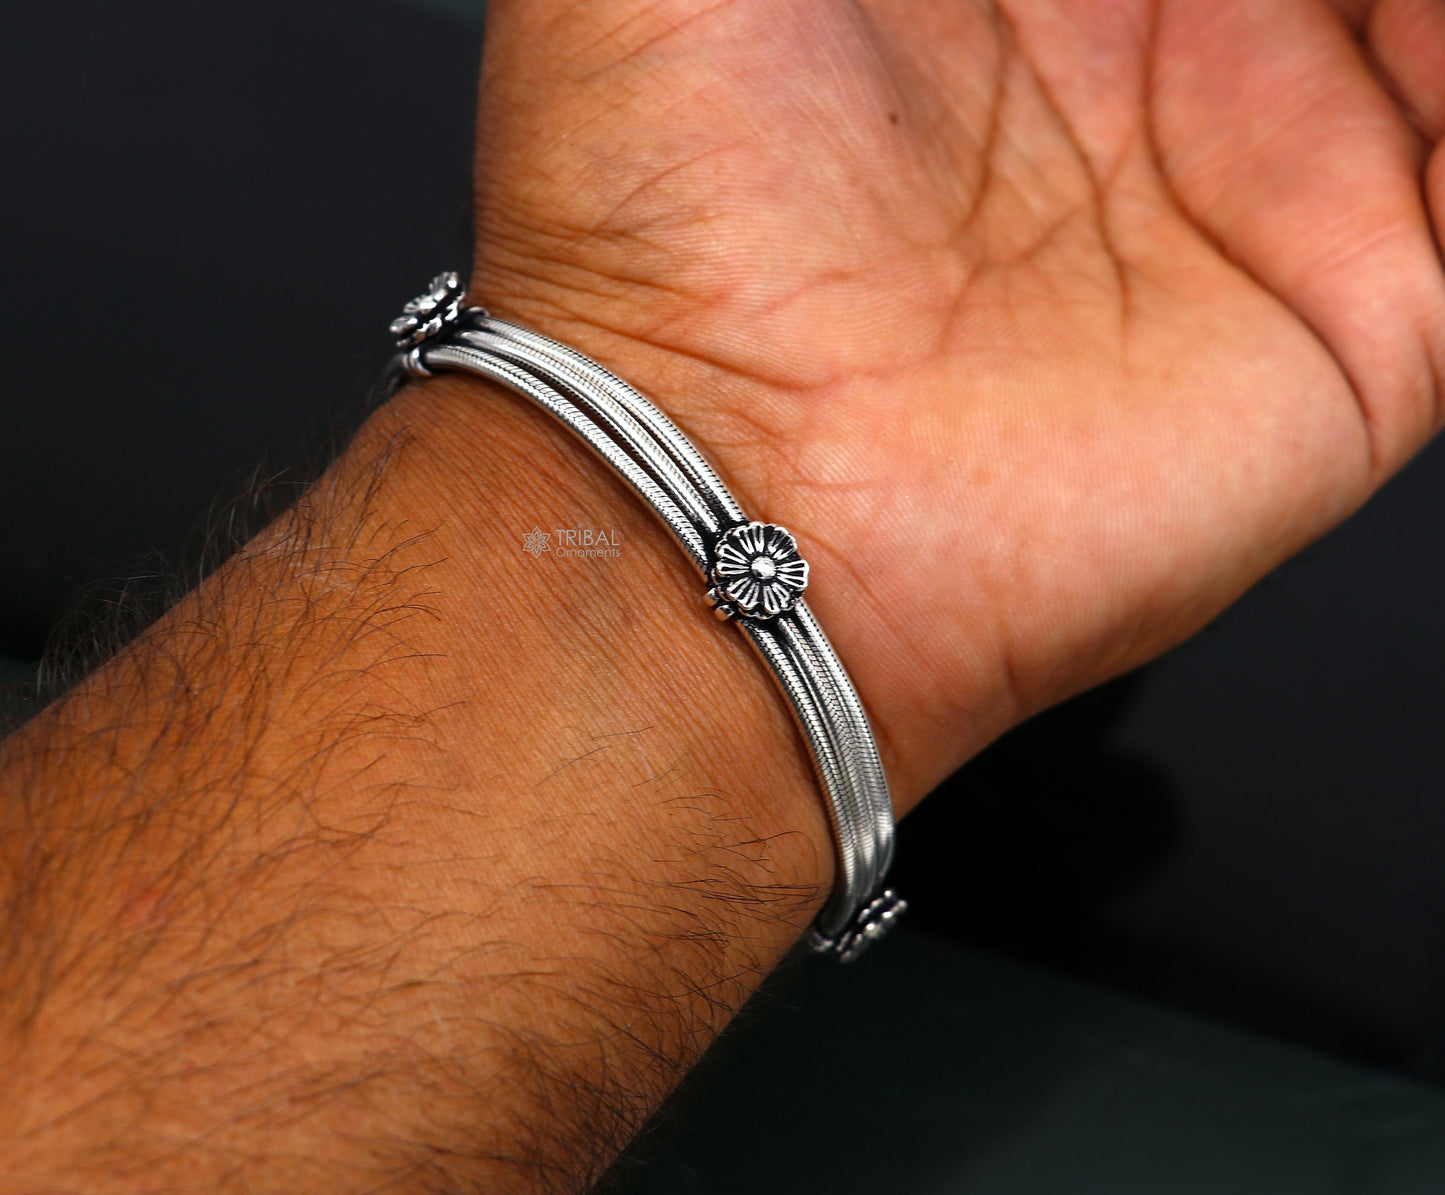 8.5" snake chain bracelet, amazing 925 sterling silver 3 line smooth design flower bracelet , best men's gifting bracelet from India sbr688 - TRIBAL ORNAMENTS